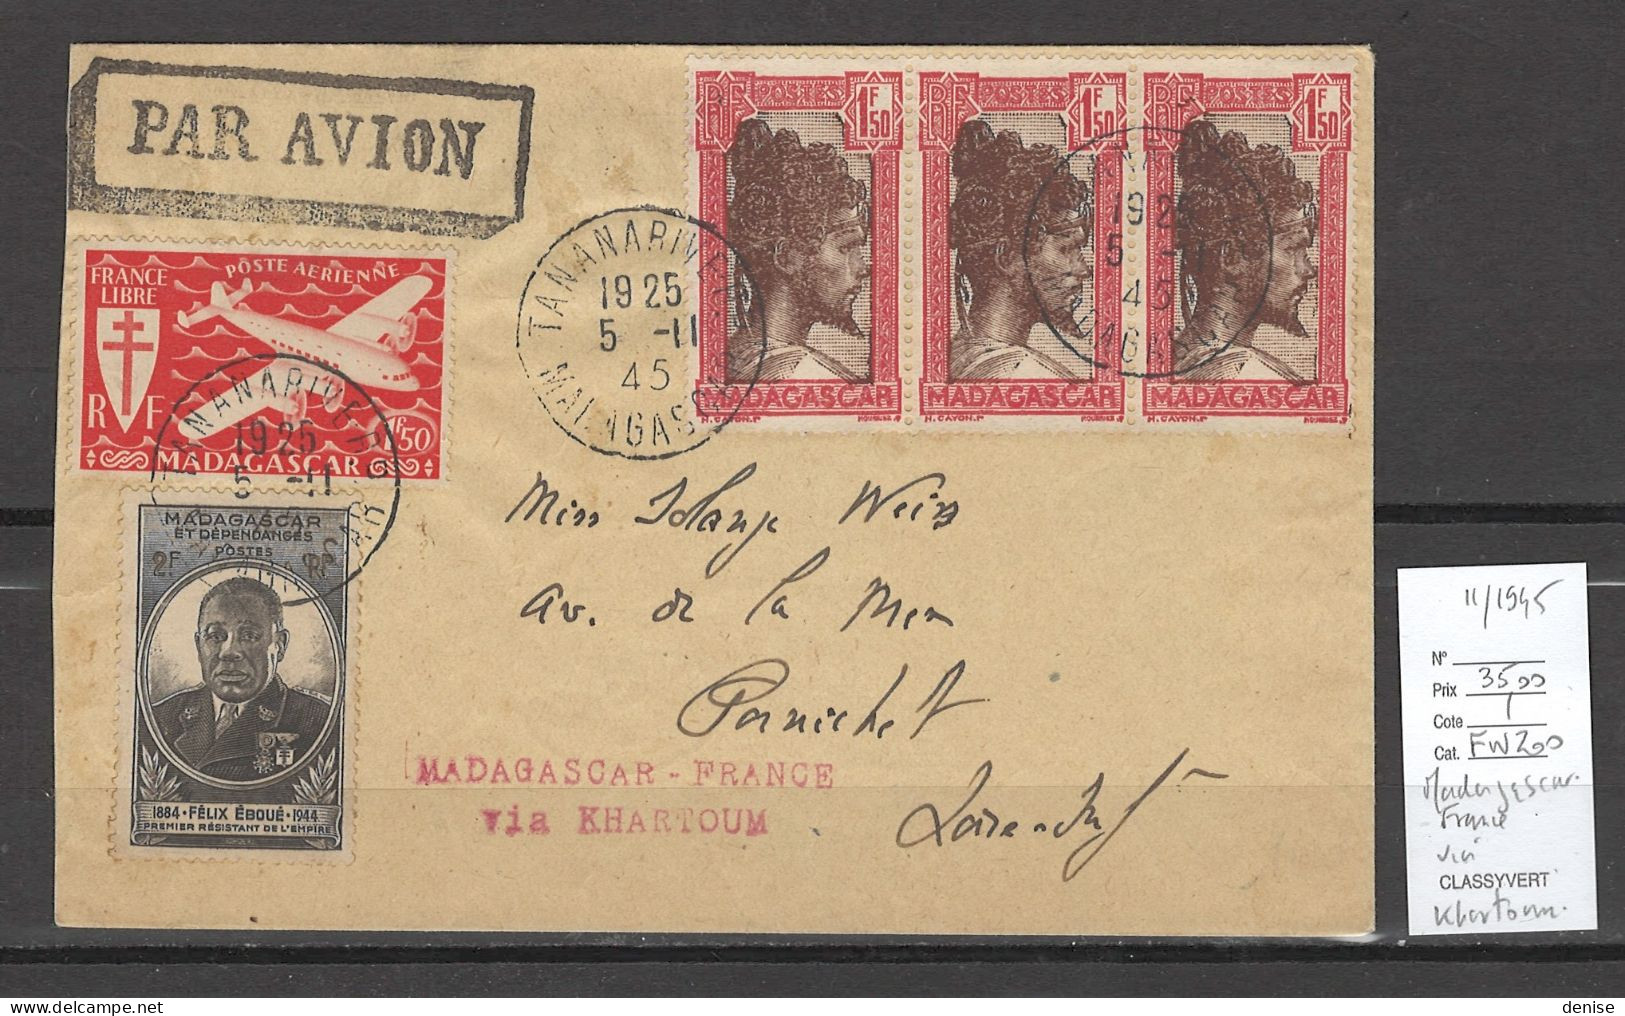 Madagascar Vers France Via Khartoum - 11/1945 - Airmail